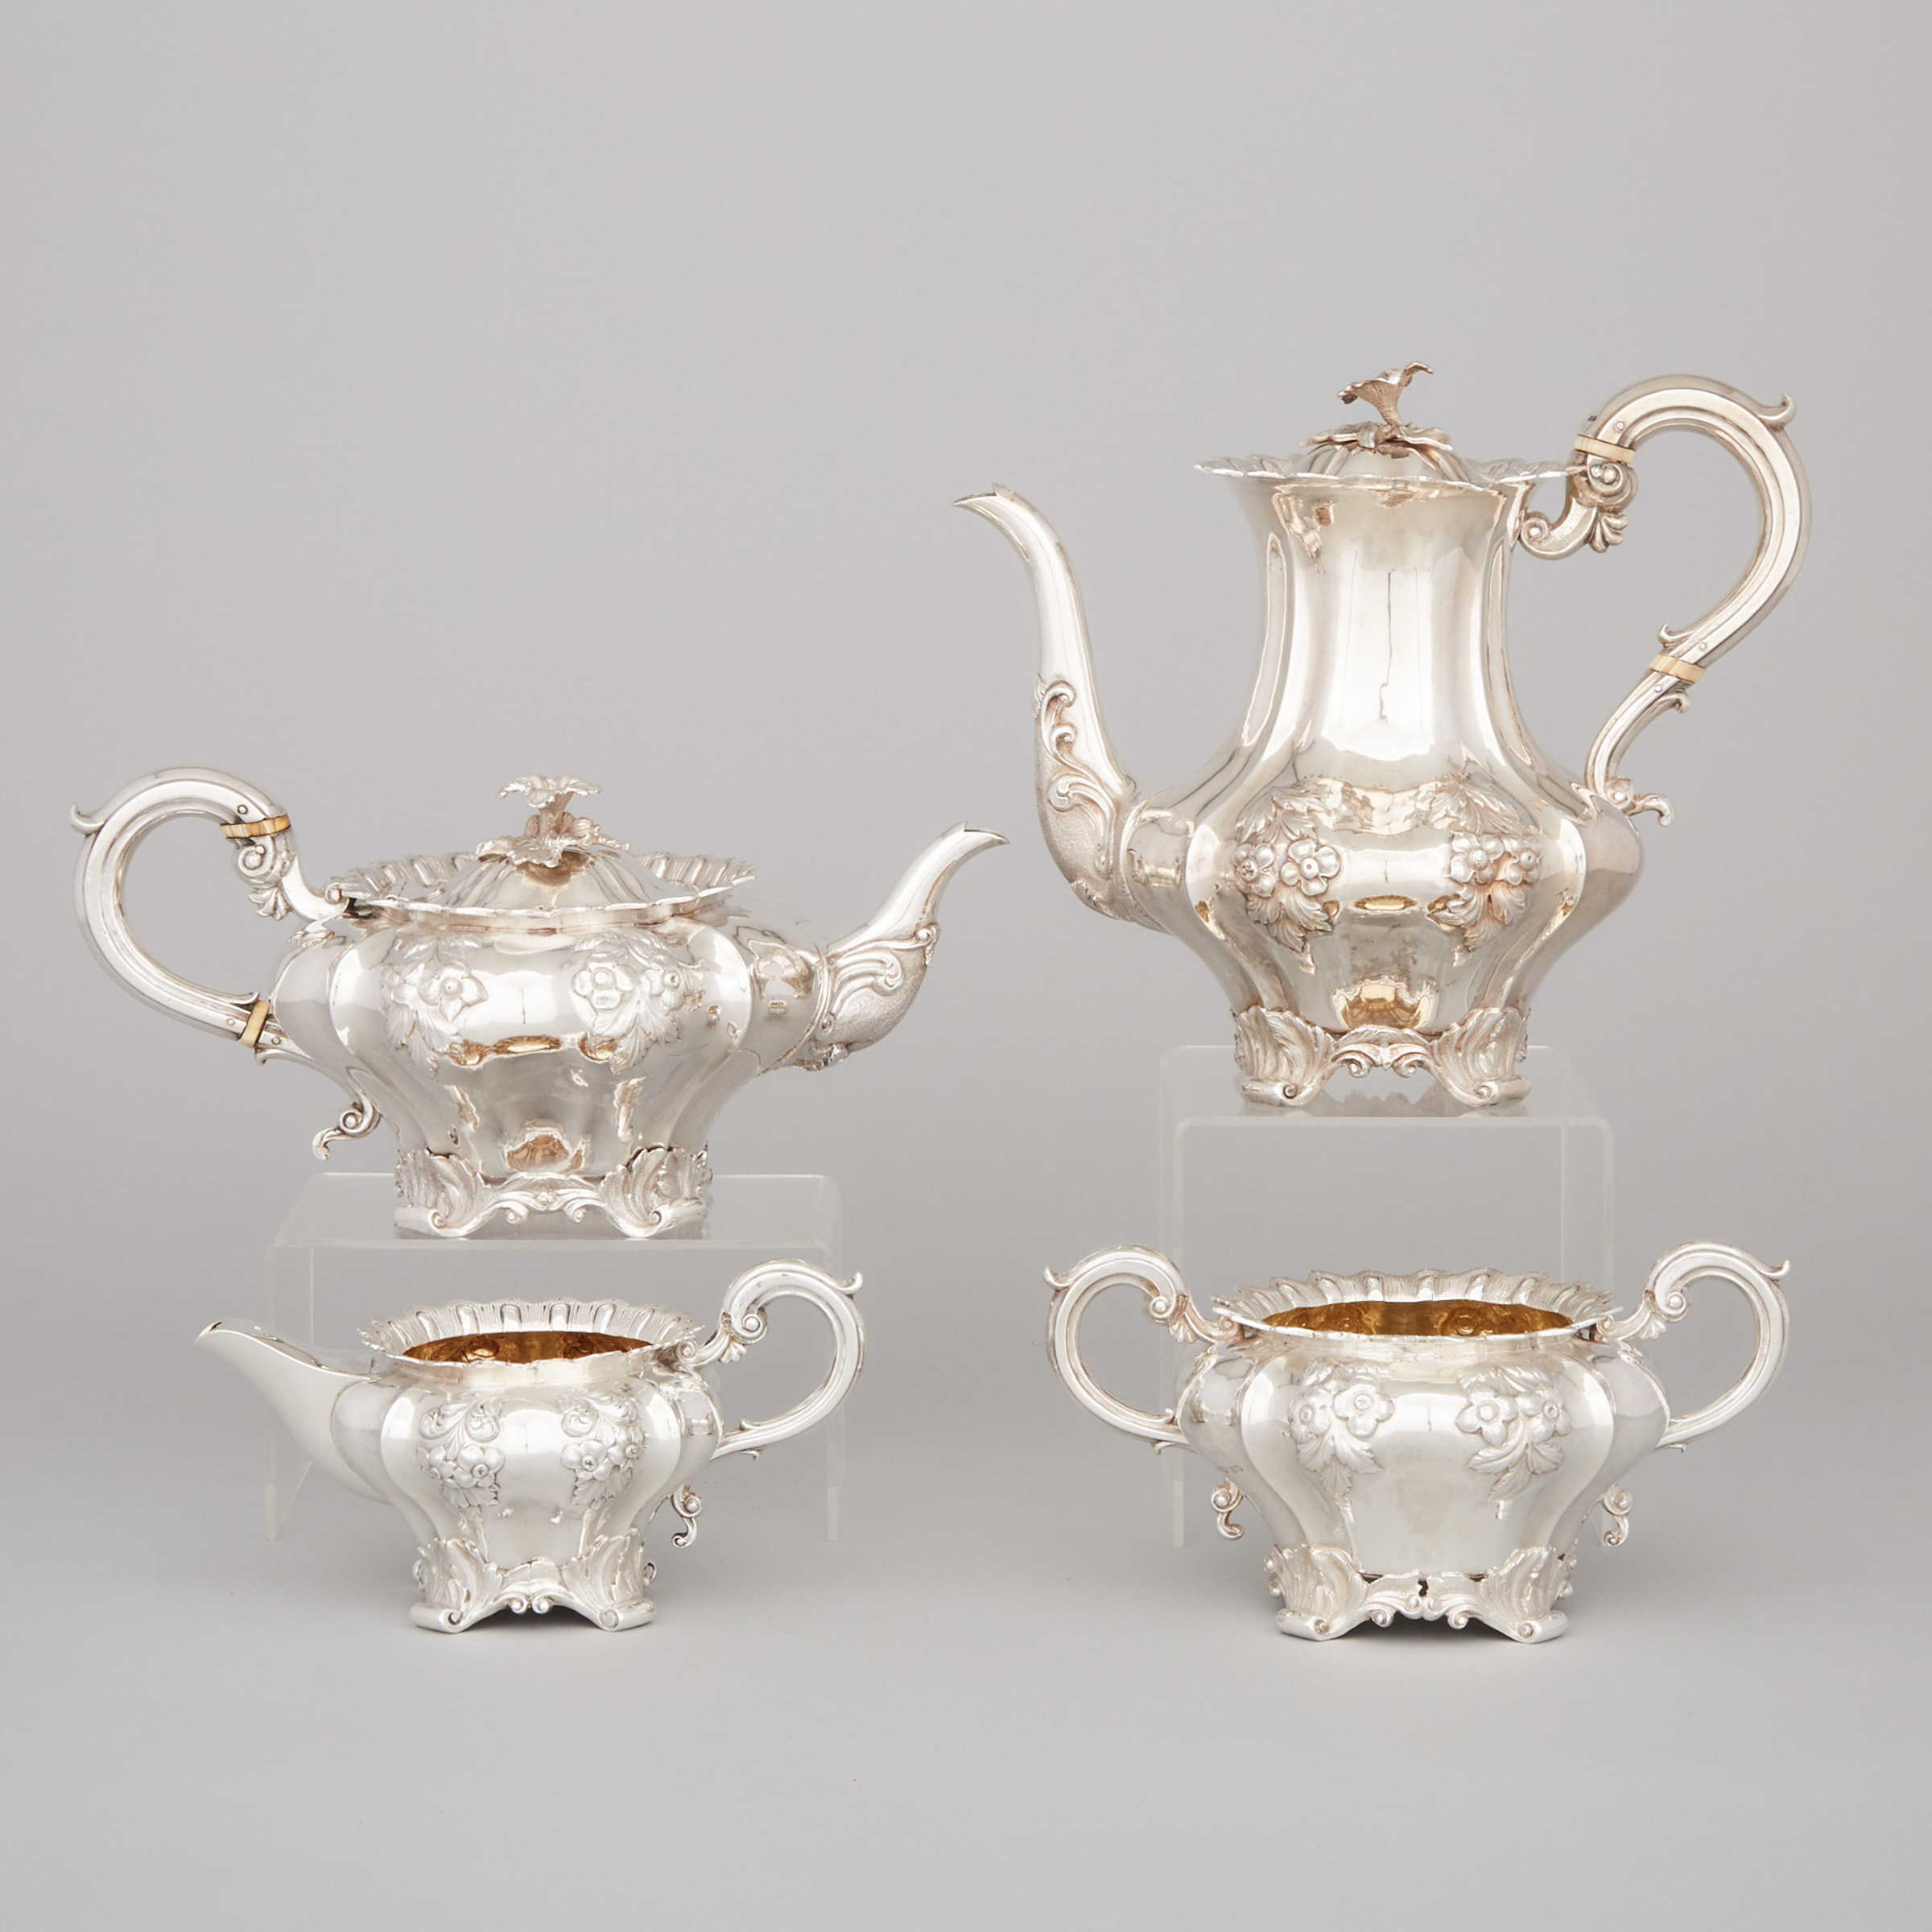 William IV Silver Tea and Coffee Service, Benjamin Stephens, London, 1835